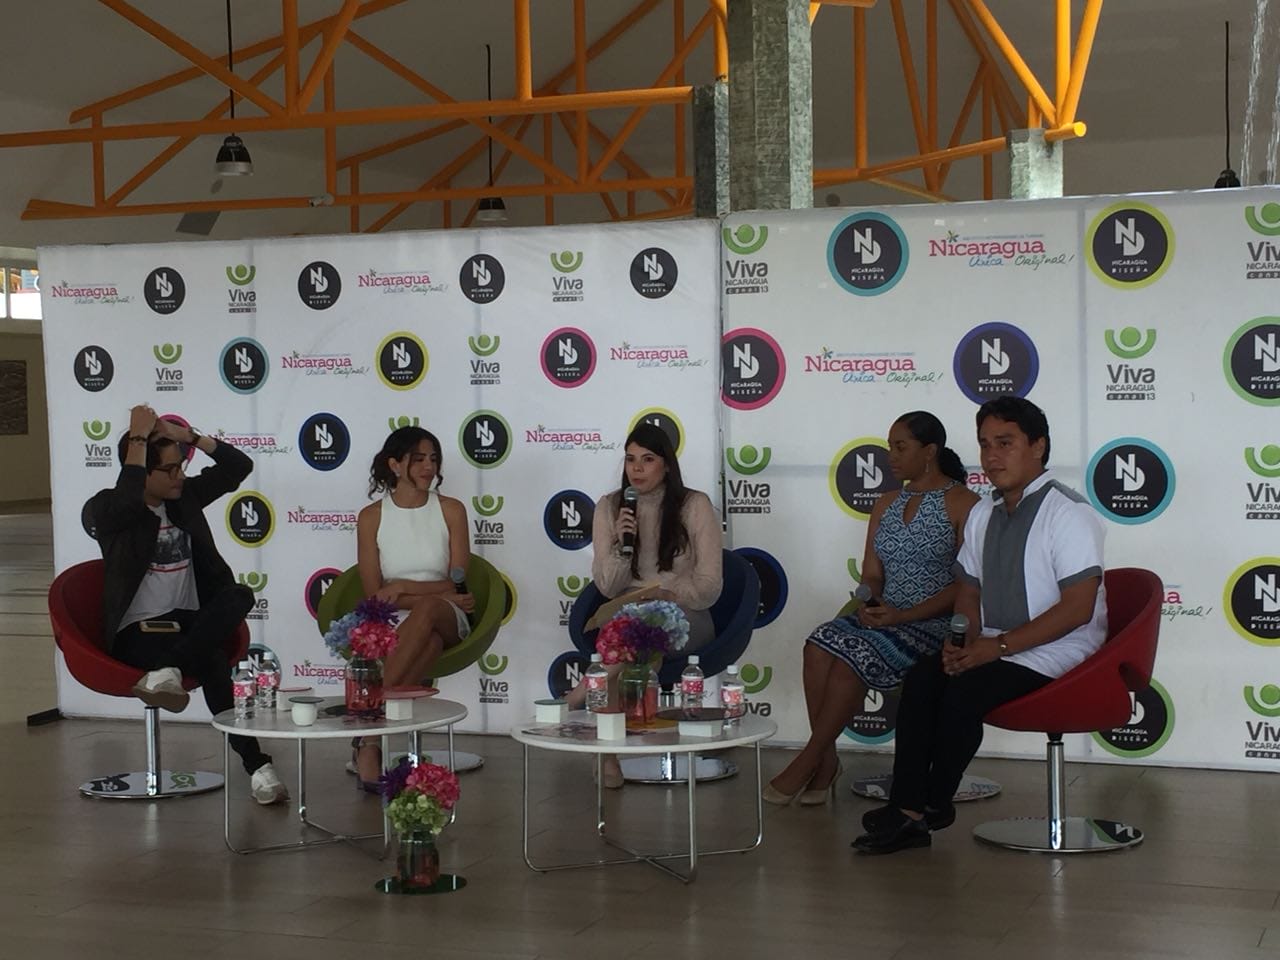 Nicaragua Diseña abre convocatorias